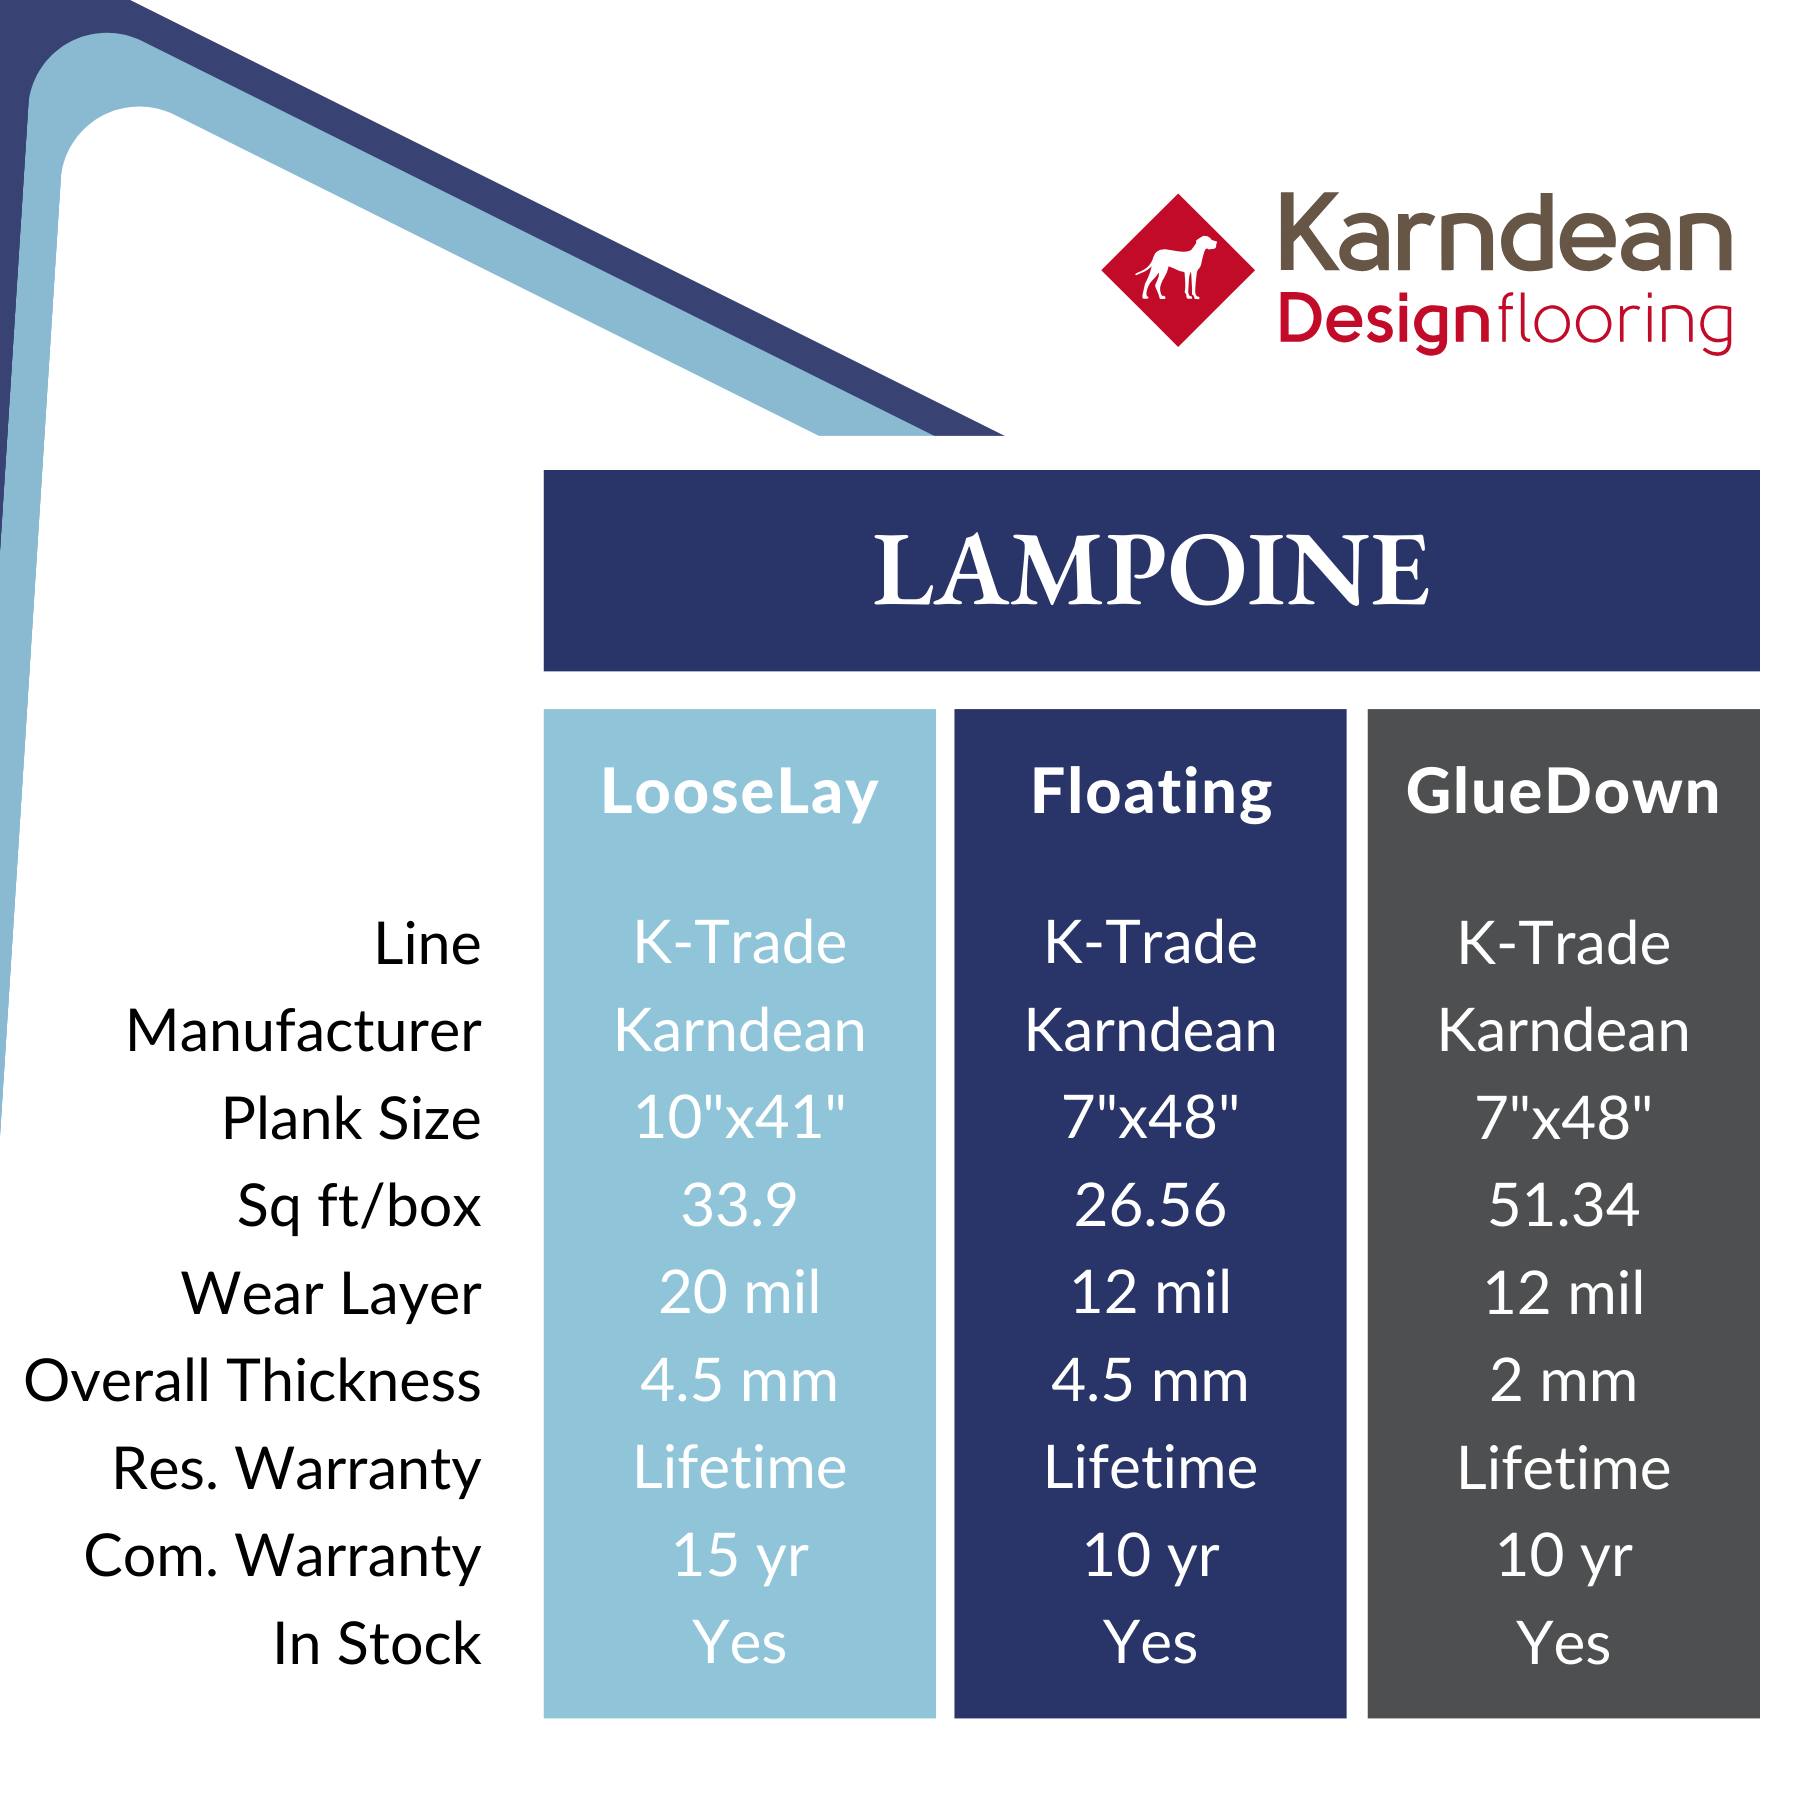 Lampione LVT by Karndean Calhoun's Flooring Outlet Springfield Specs